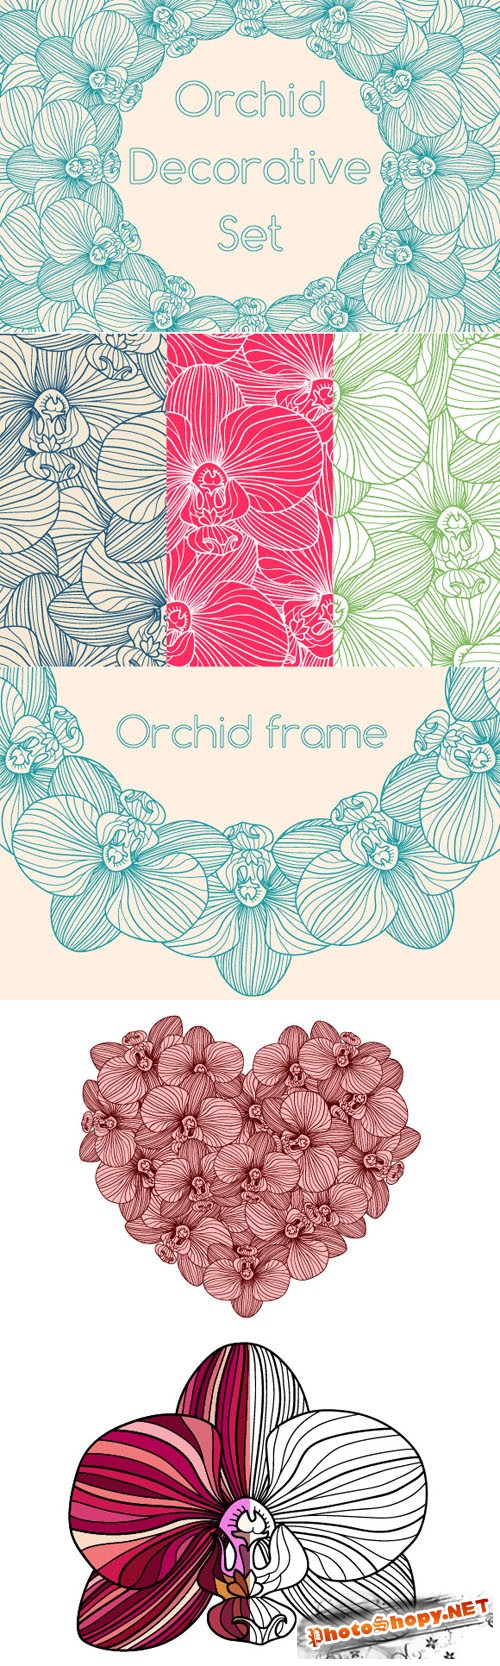 Decorative Orchid Set - Creativemarket 224931